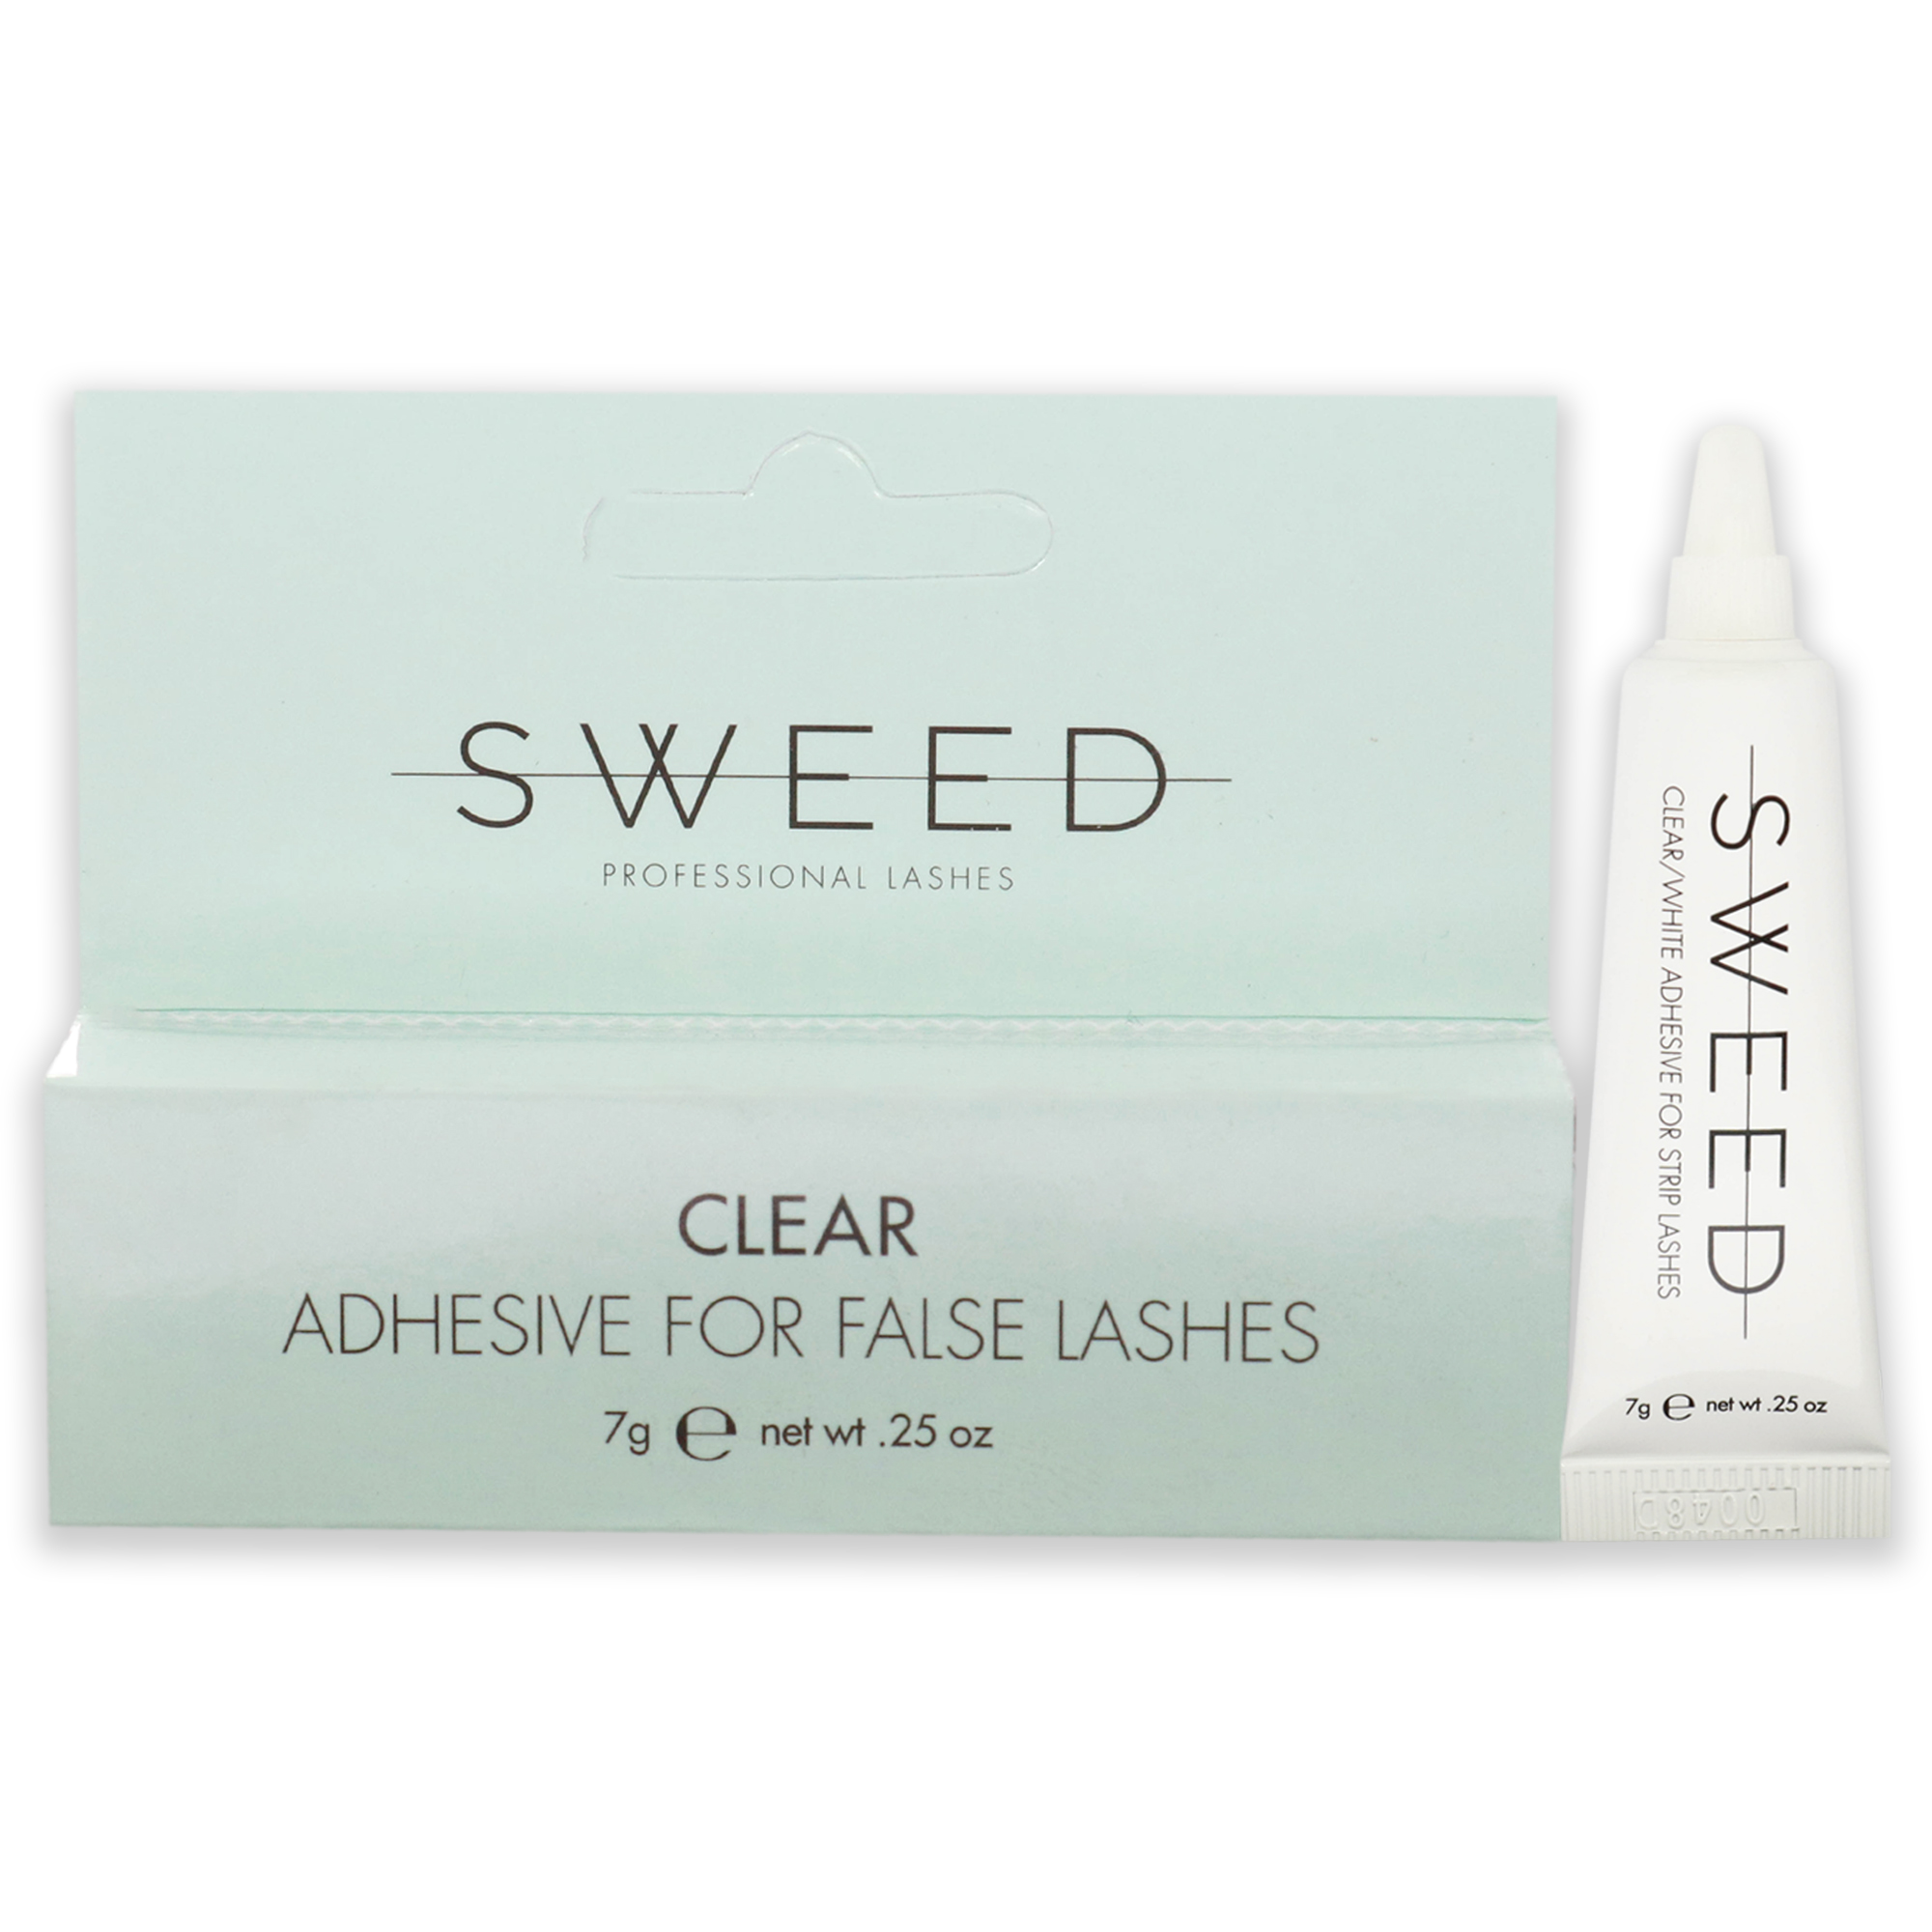 Adhesive for False Lashes - Clear-White by Sweed Lashes for Women - 0.25 oz Eyelash Glue